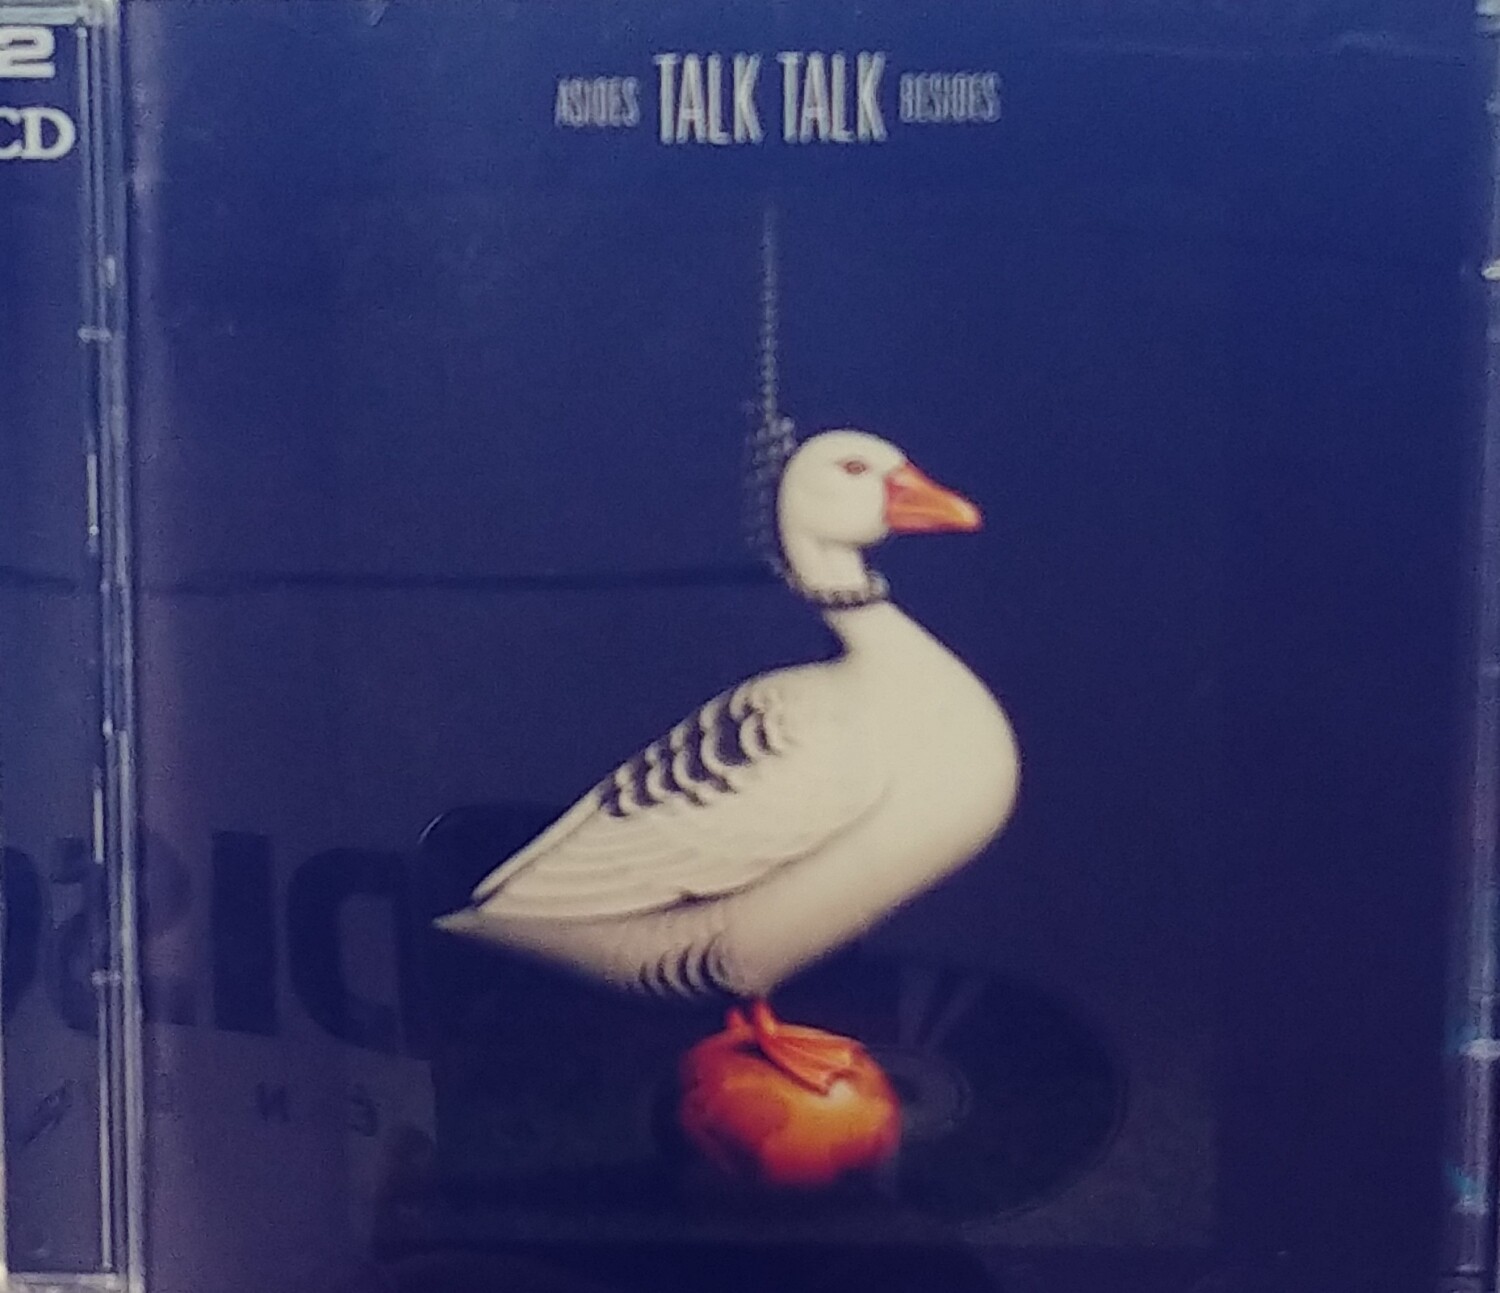 Talk Talk - Asides Bsides (CD)